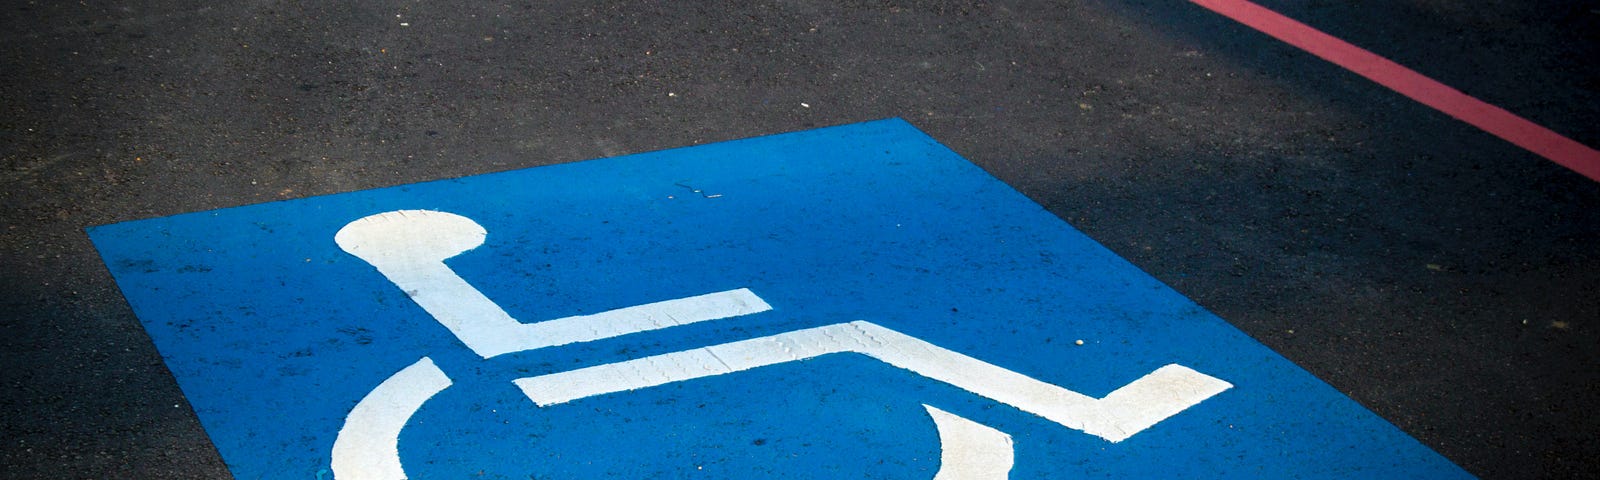 Reserved disabled parking spot